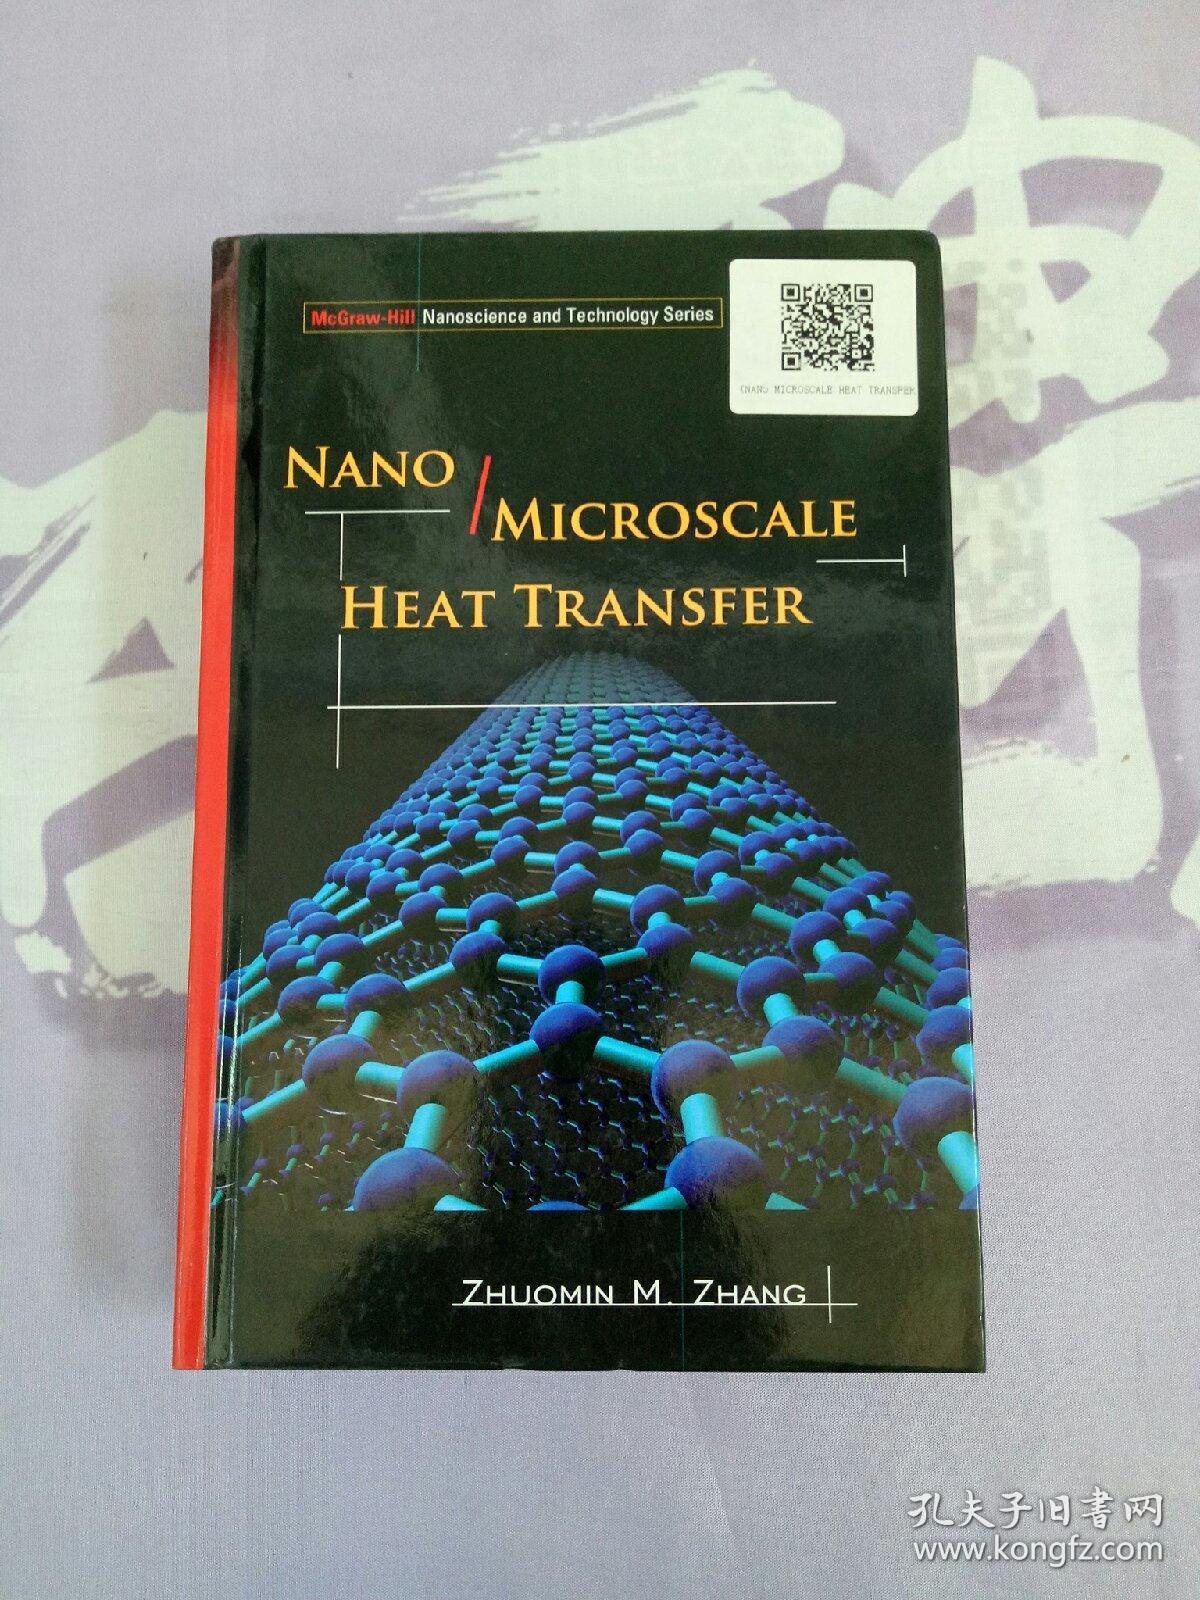 Nano/Microscale Heat Transfer (McGraw-Hill Nanoscience and Technology)